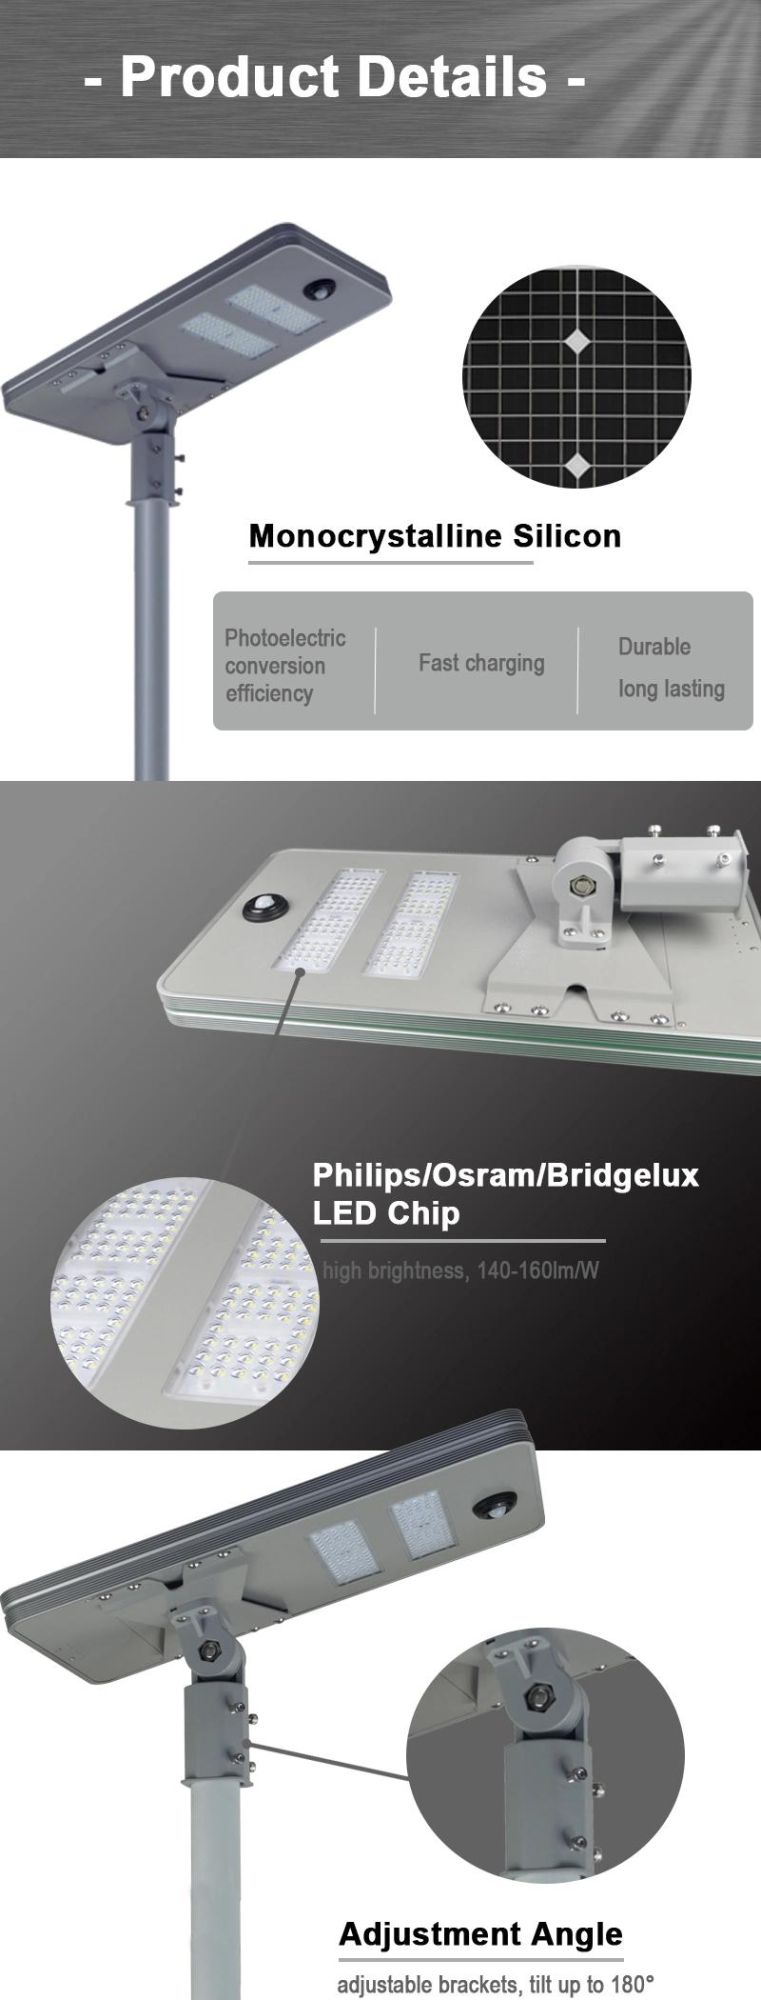 Top Sale Adjustable 30W LED Solar Street Lamp with PIR/Microwave Motion Sensor